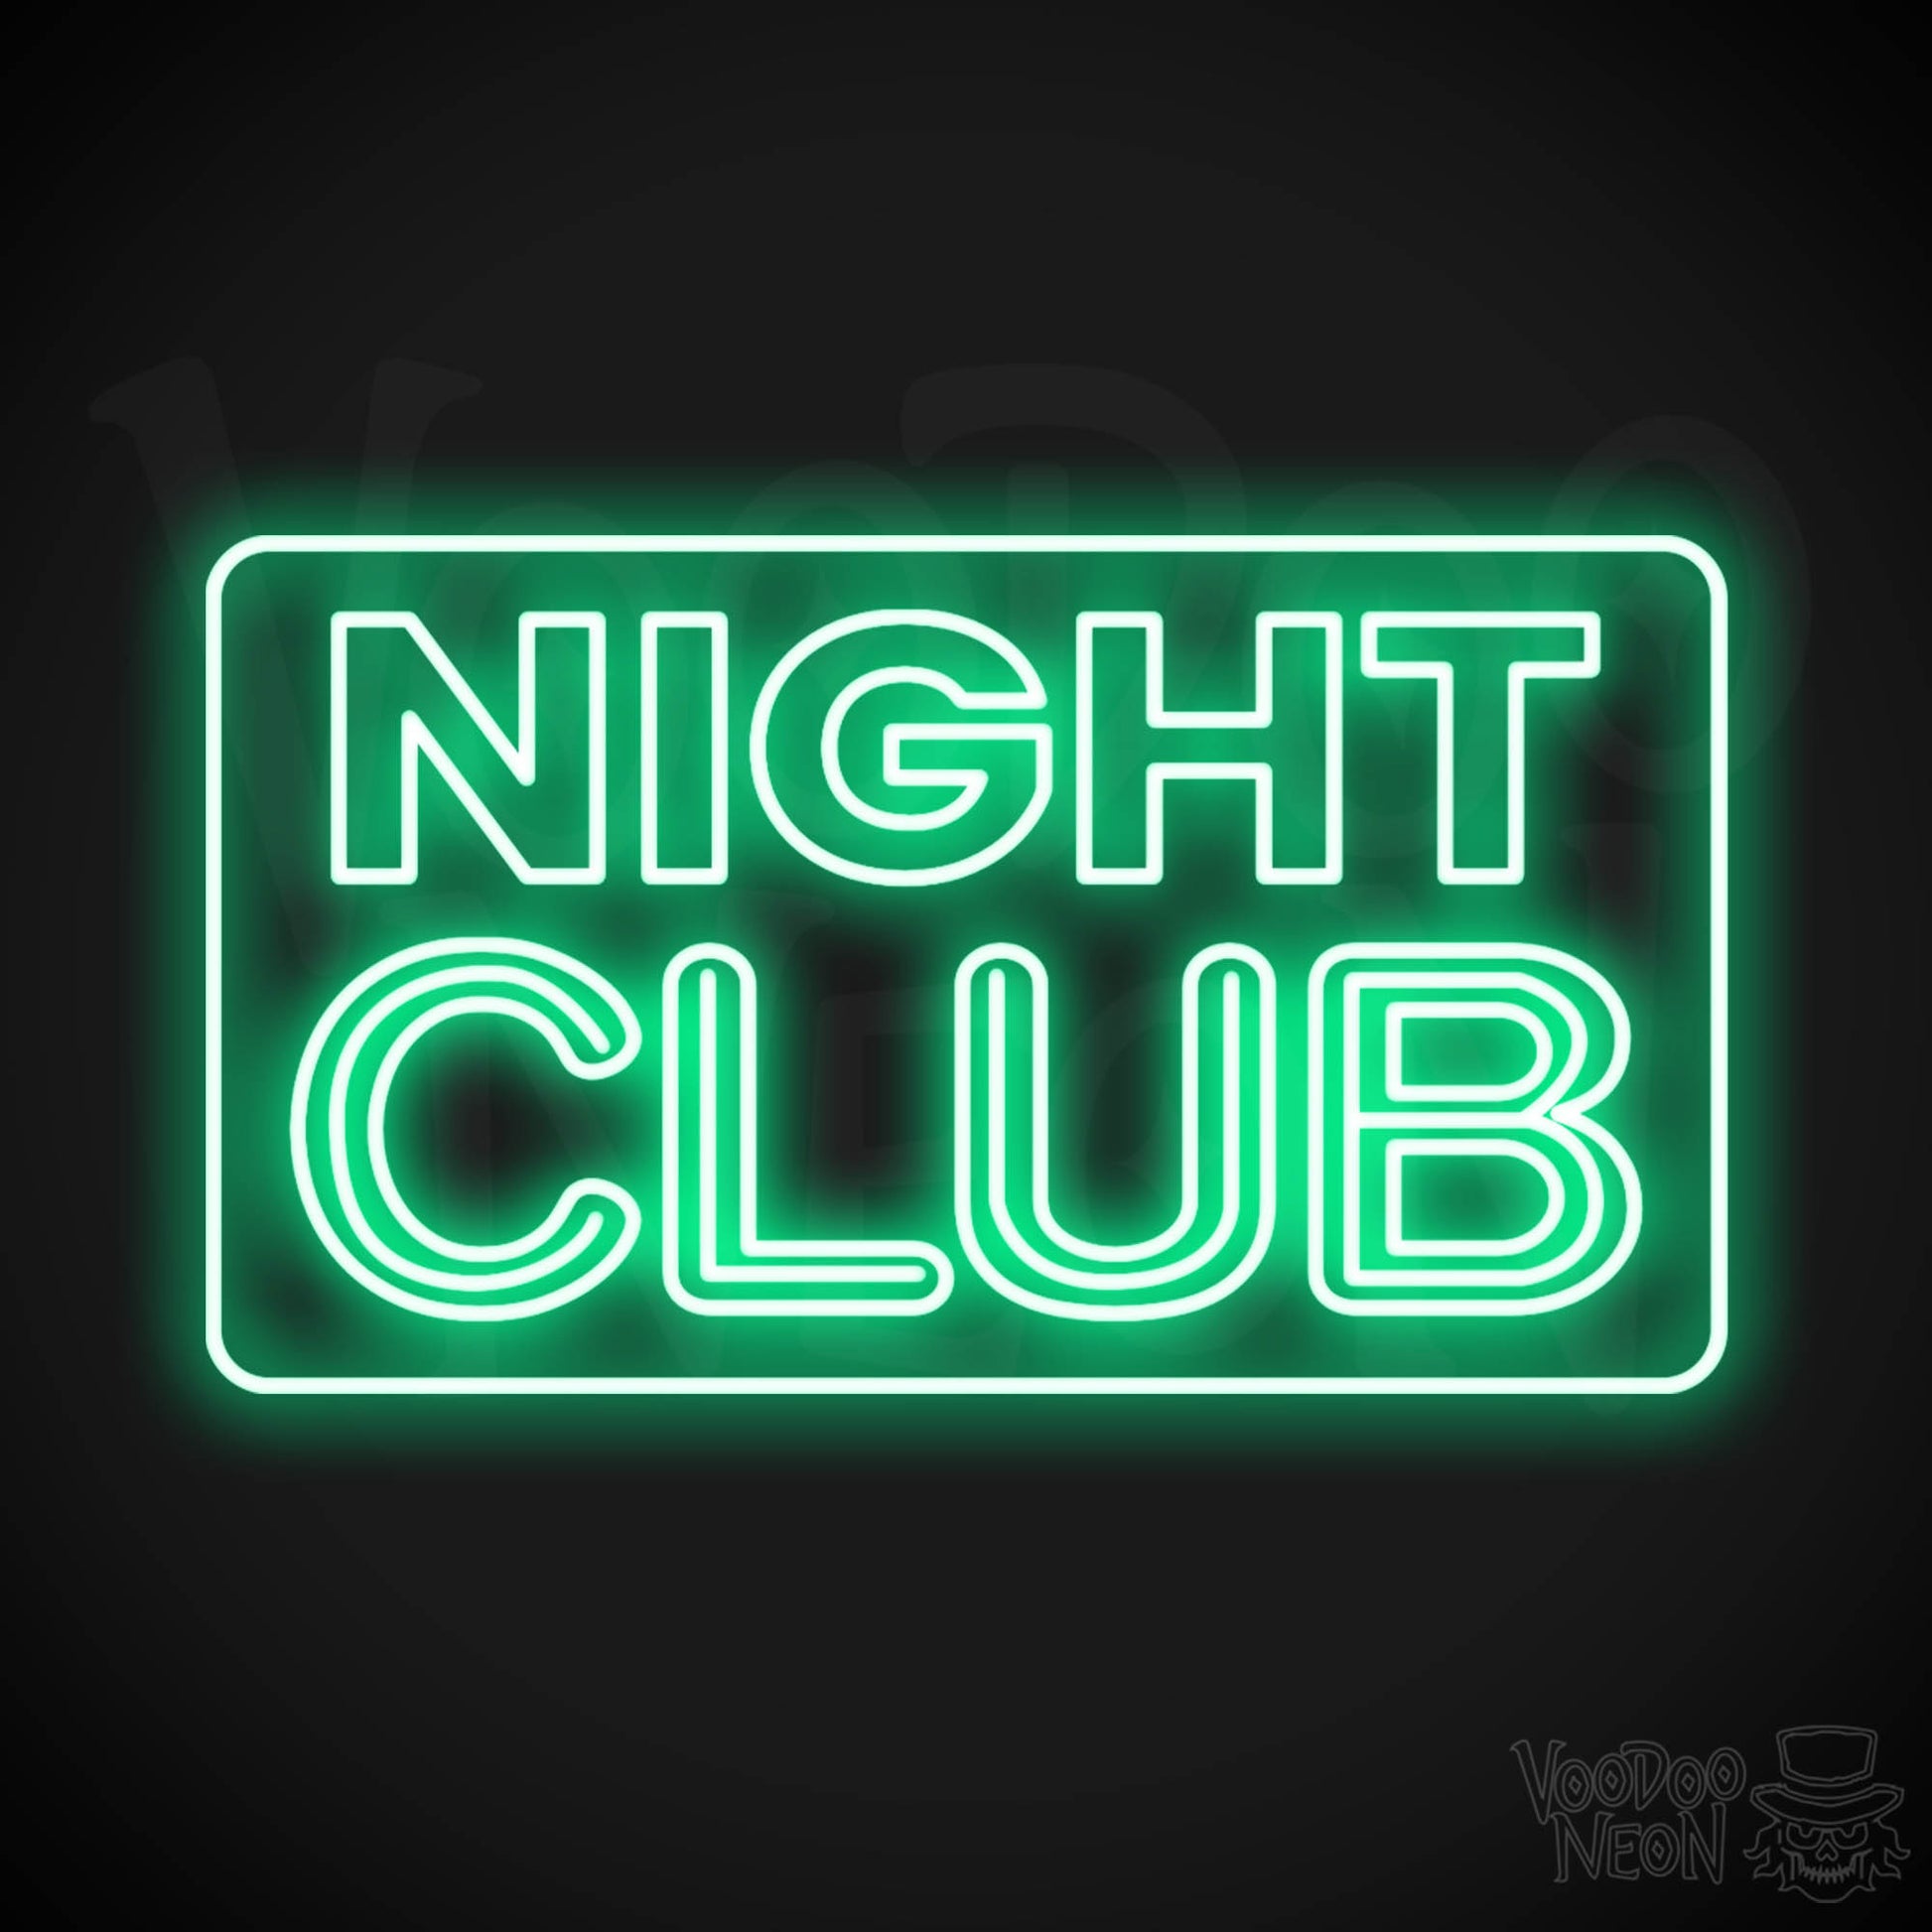 Night Club LED Neon - Green